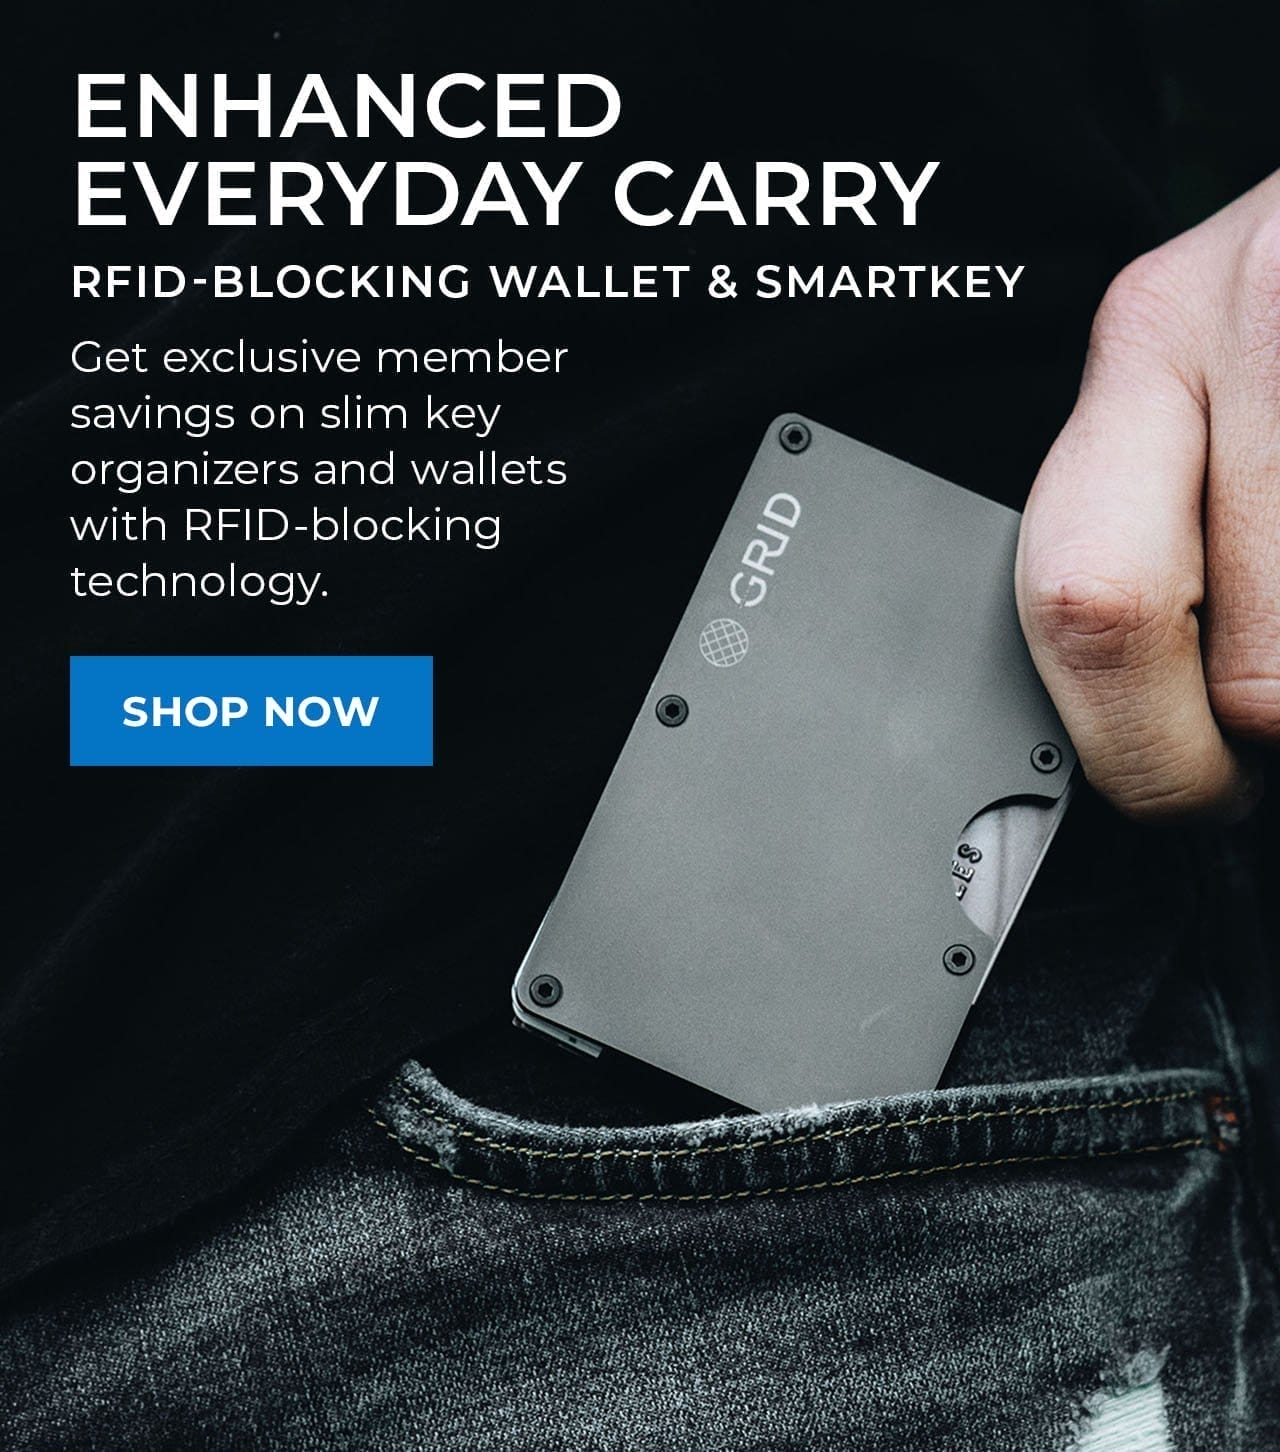 RFID-Blocking Wallet & Smartkey | SHOP NOW